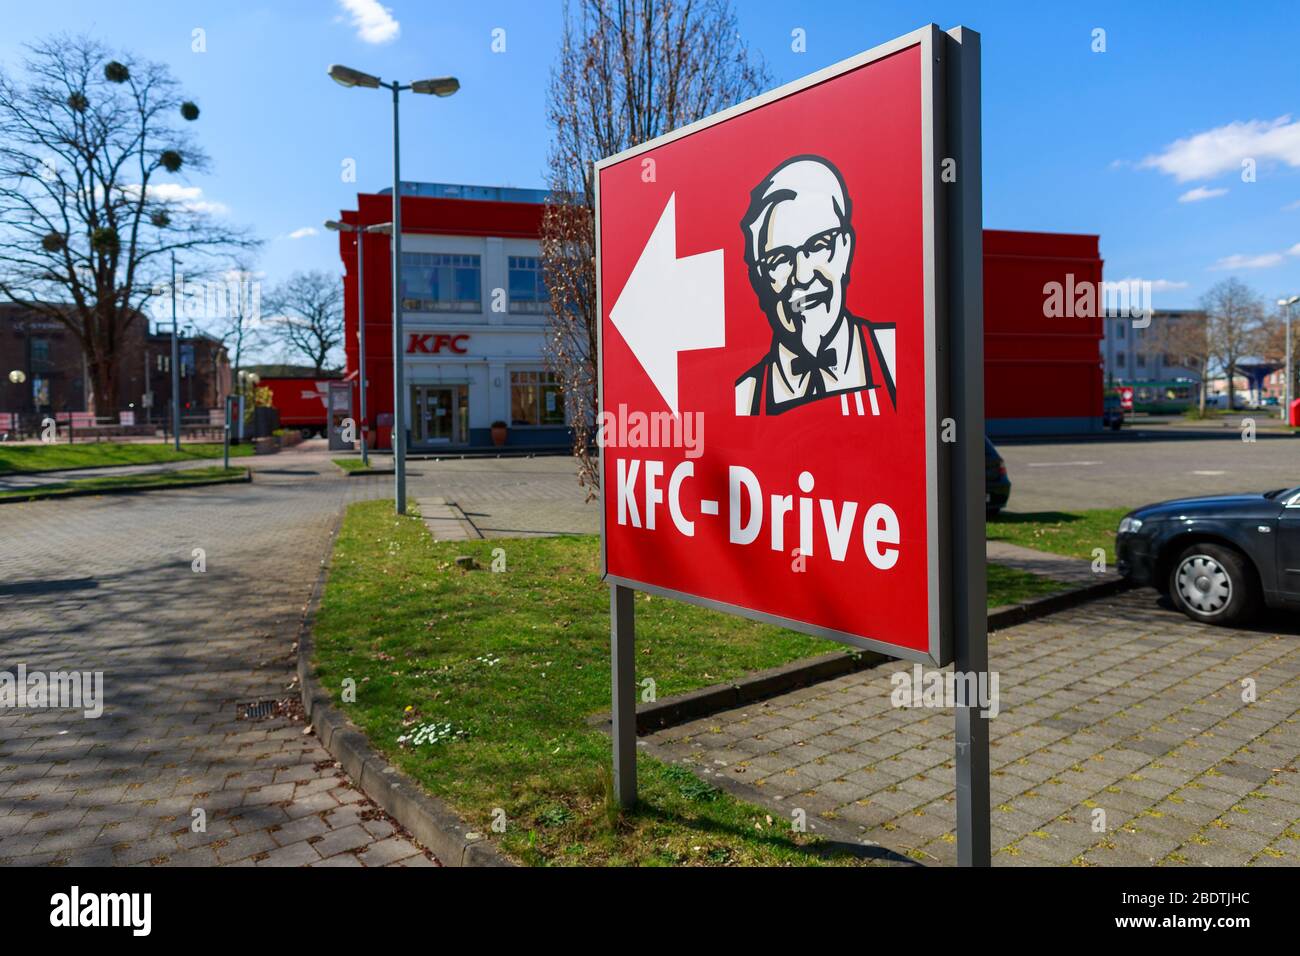 KFC Drive-Thru - NELSON Worldwide